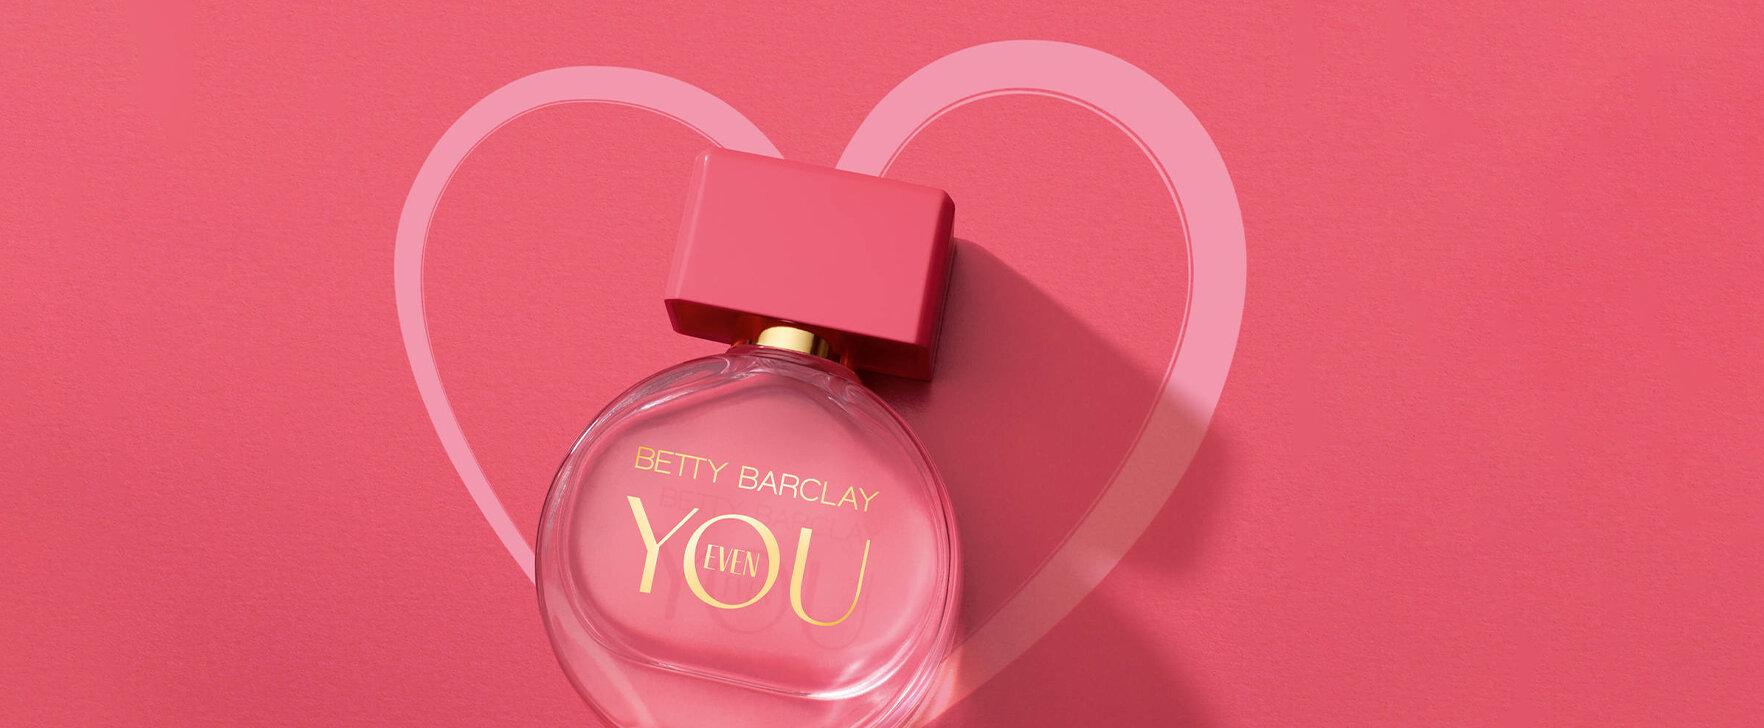 „Even You“ - Betty Barclay lanciert neue Duftkreation